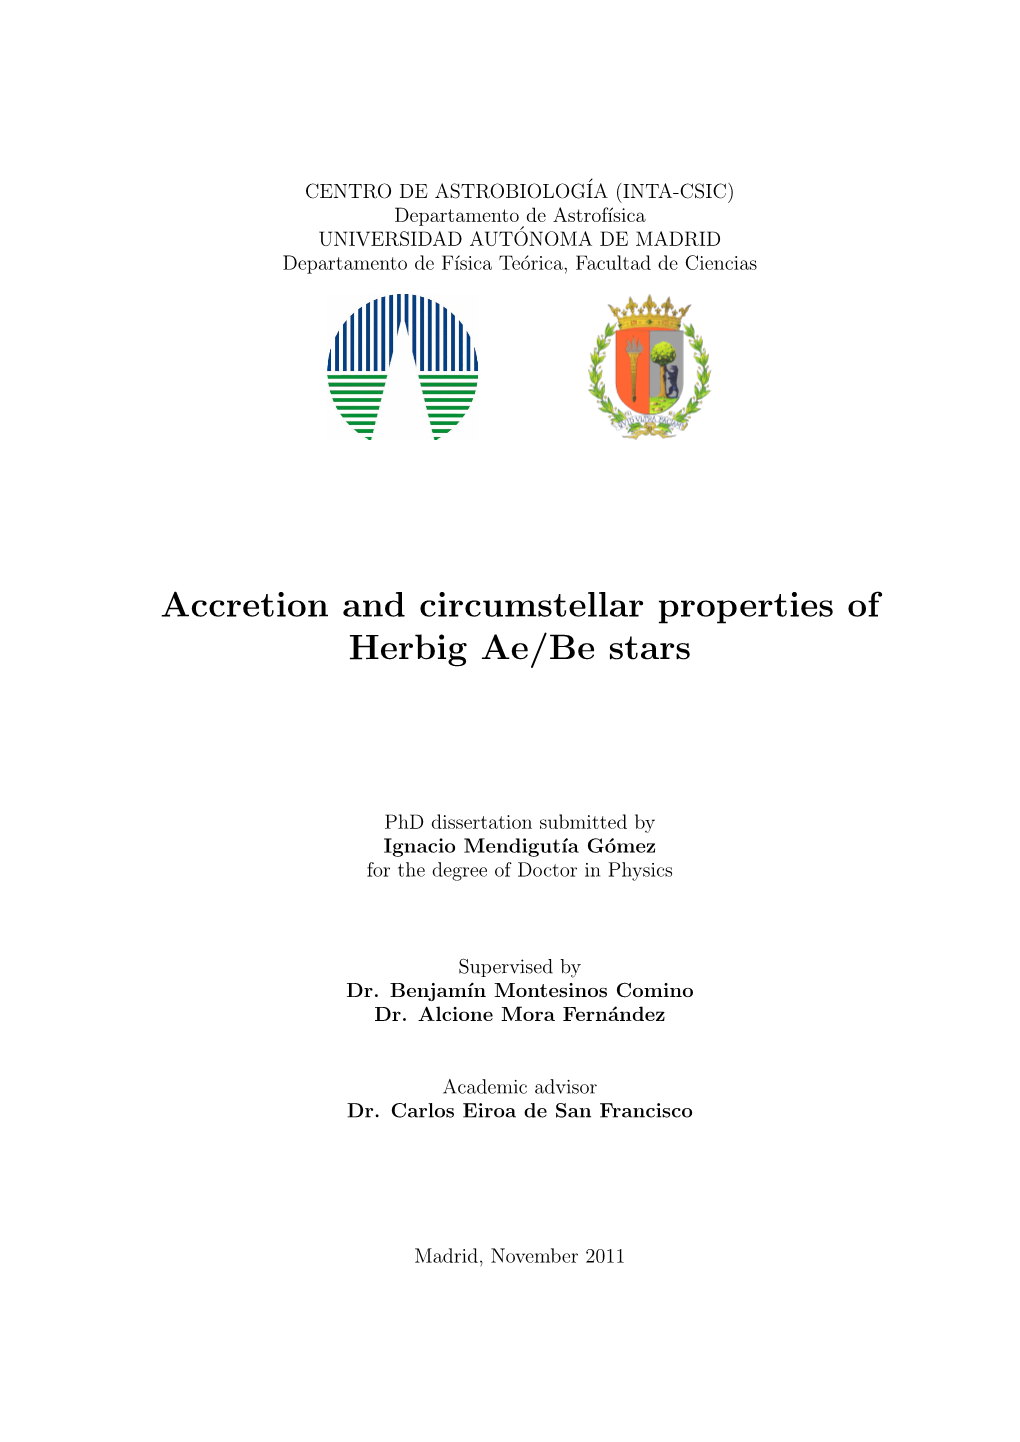 Accretion and Circumstellar Properties of Herbig Ae/Be Stars